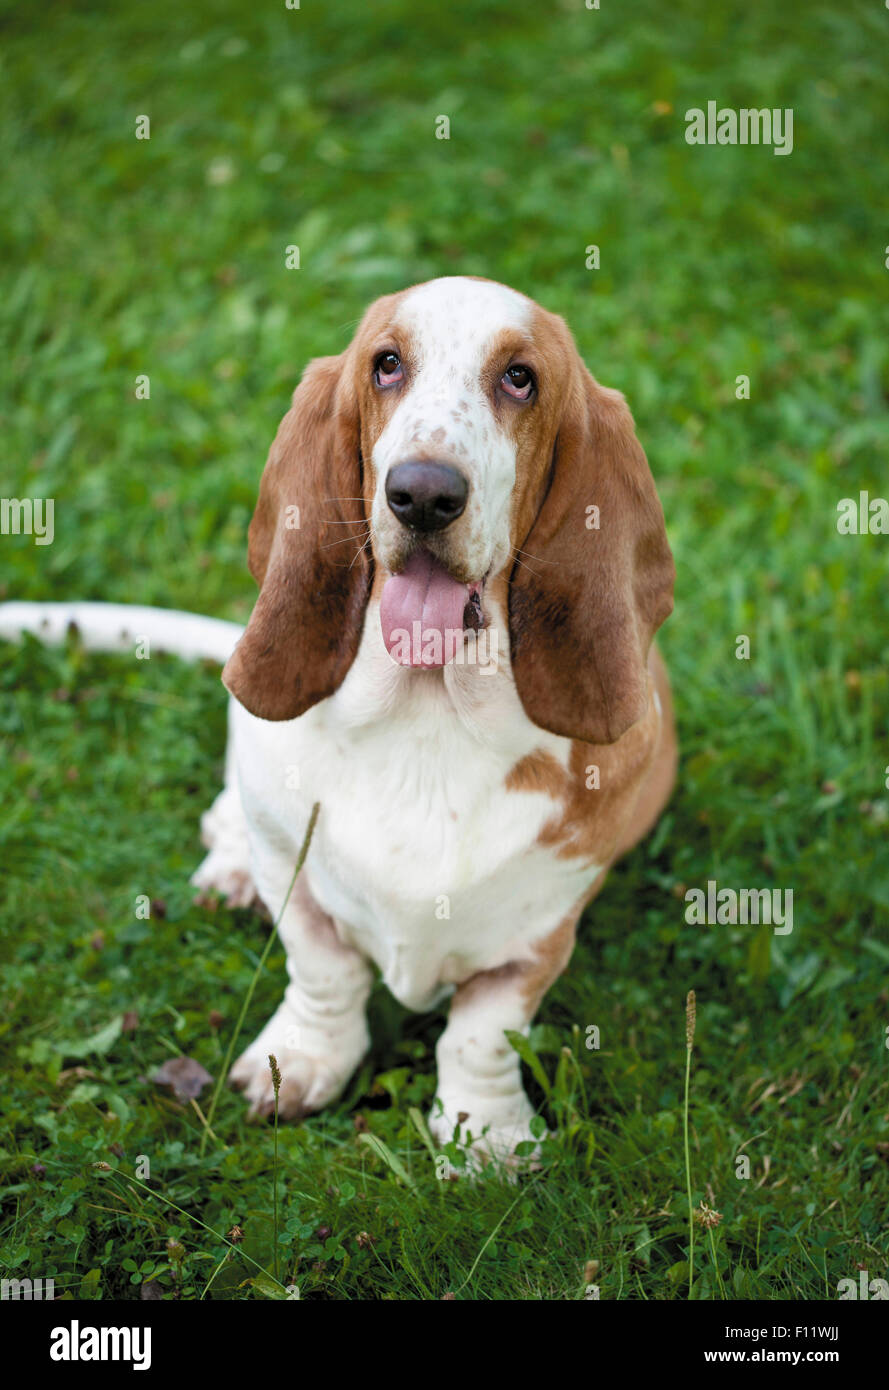 Basset Hound dog sitting adultes meadow Banque D'Images